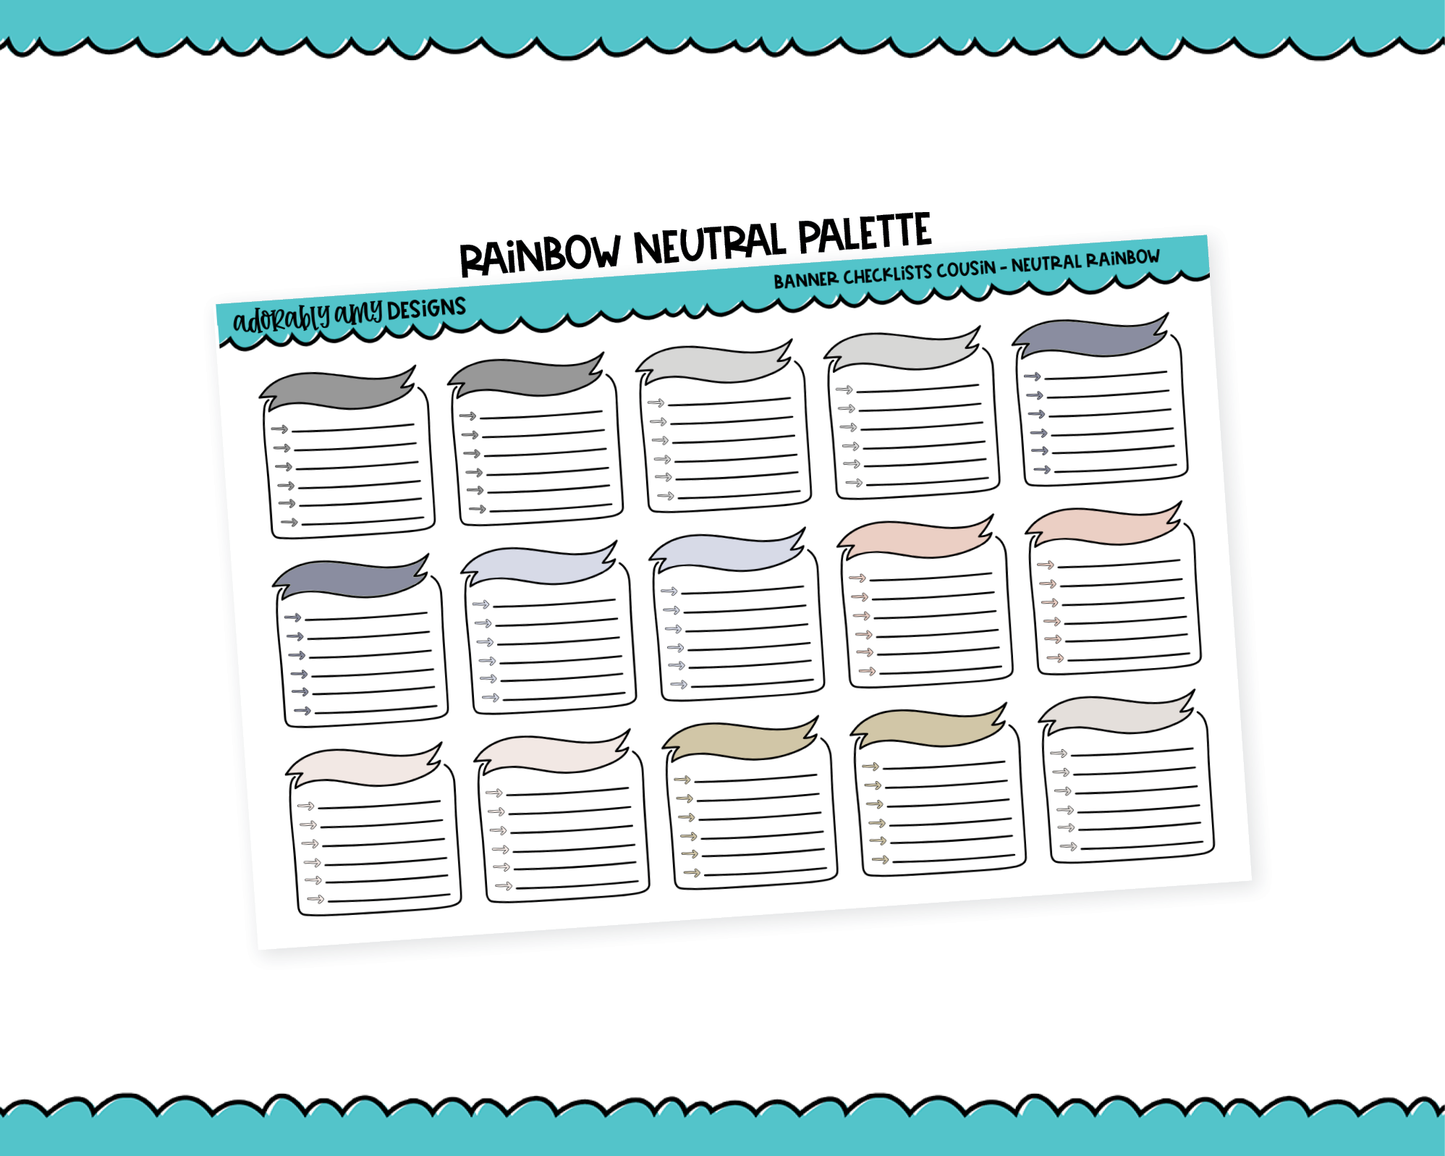 Hobo Cousin Rainbow Banner Checklist Boxes Planner Stickers for Hobo Cousin or any Planner or Insert